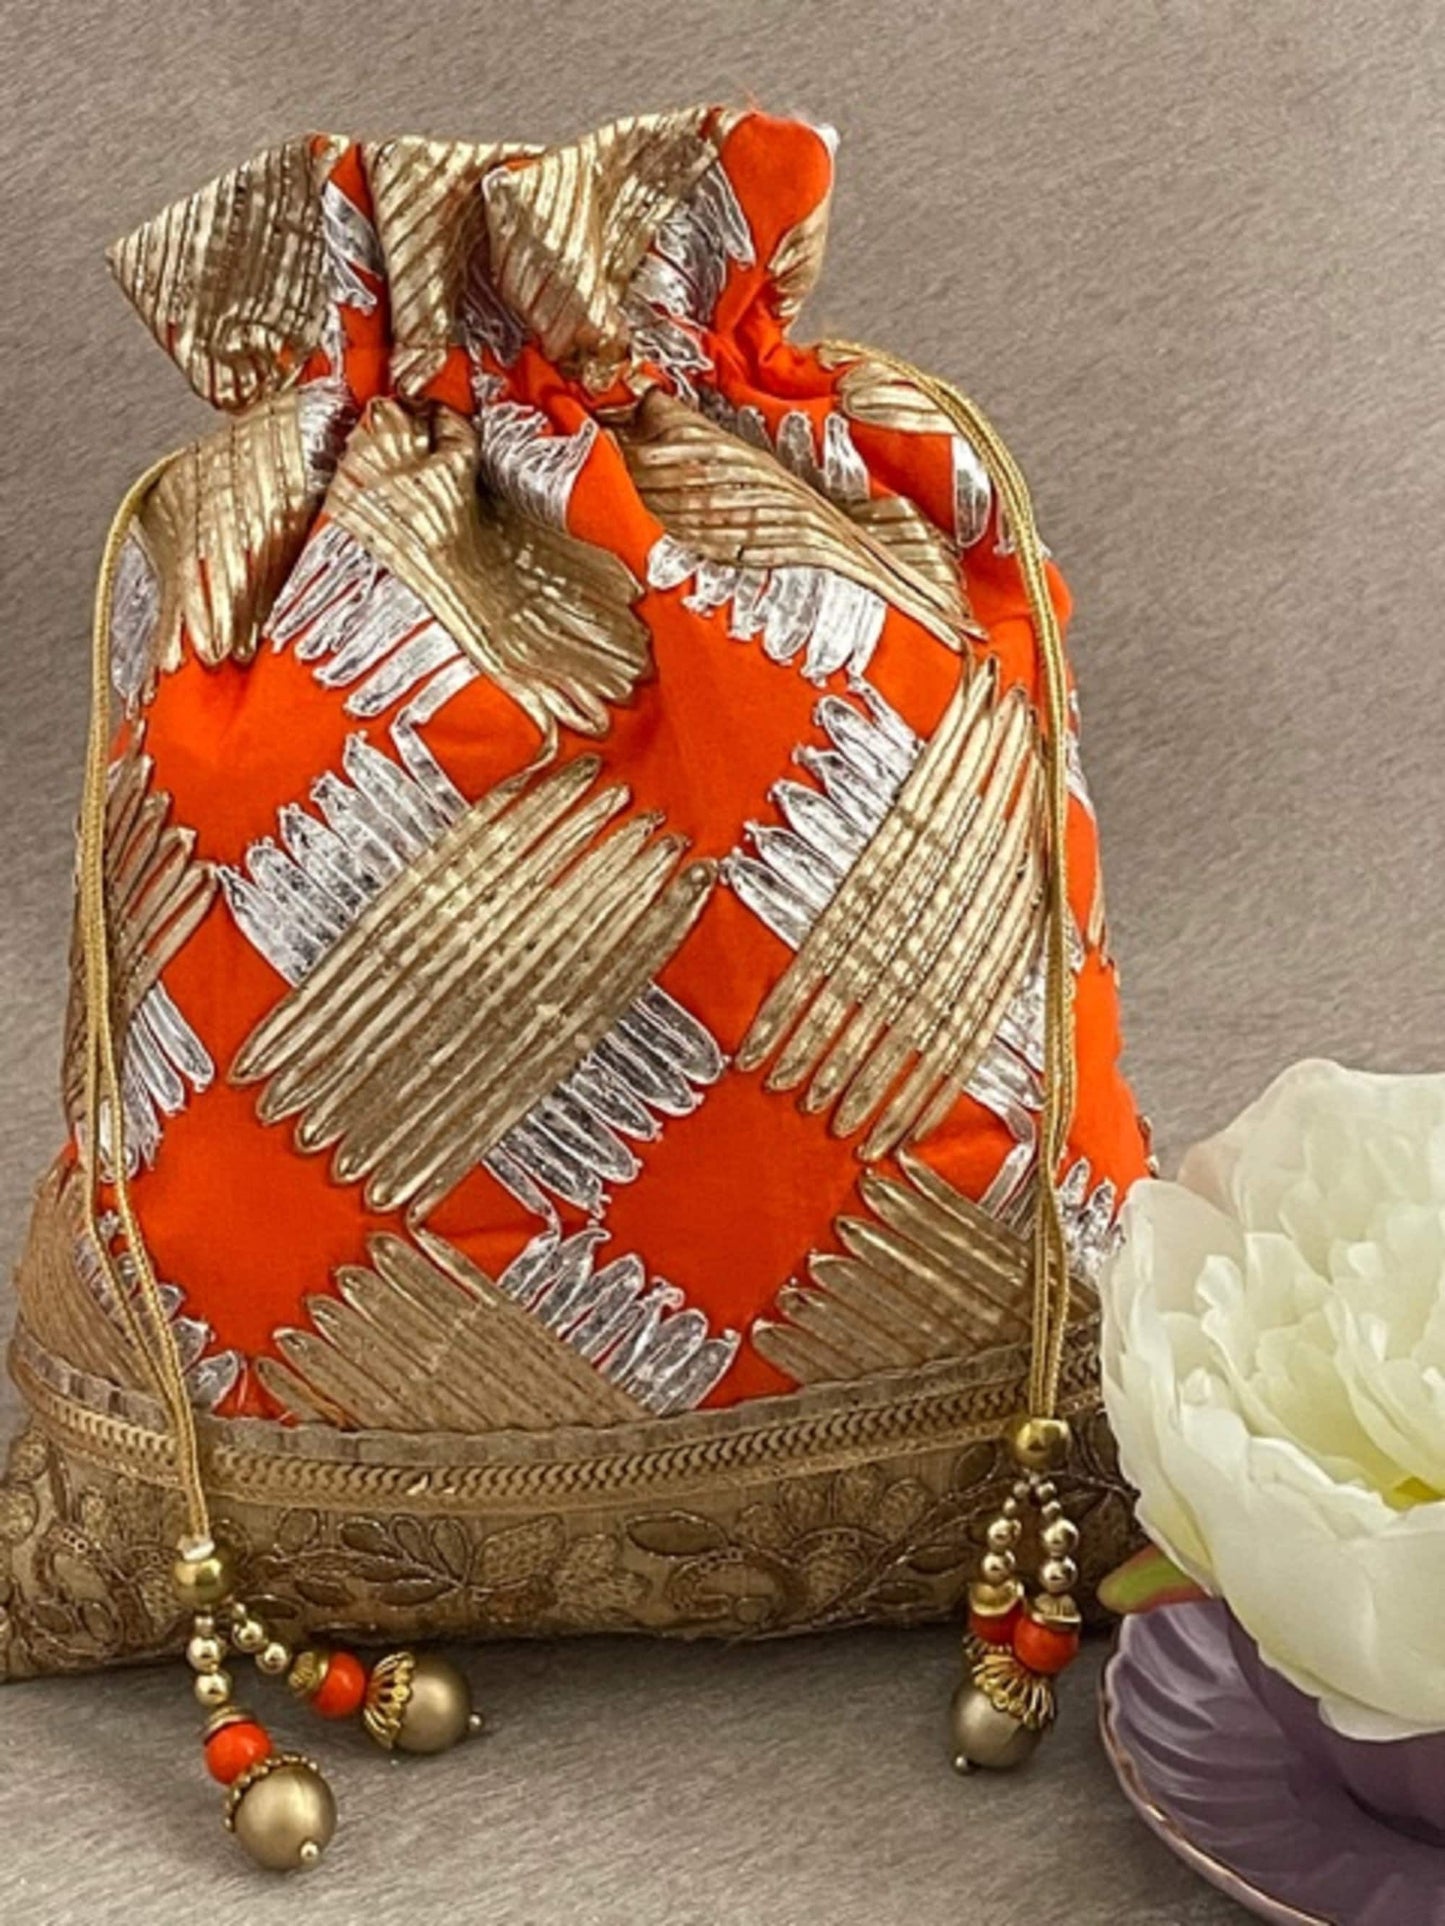 One Large Potli Bidd Mewa Bag Three Colours to chose from Potli Drawstring Bags Wedding Favors Hens Night Bridemaids gifts Drawstring Gota